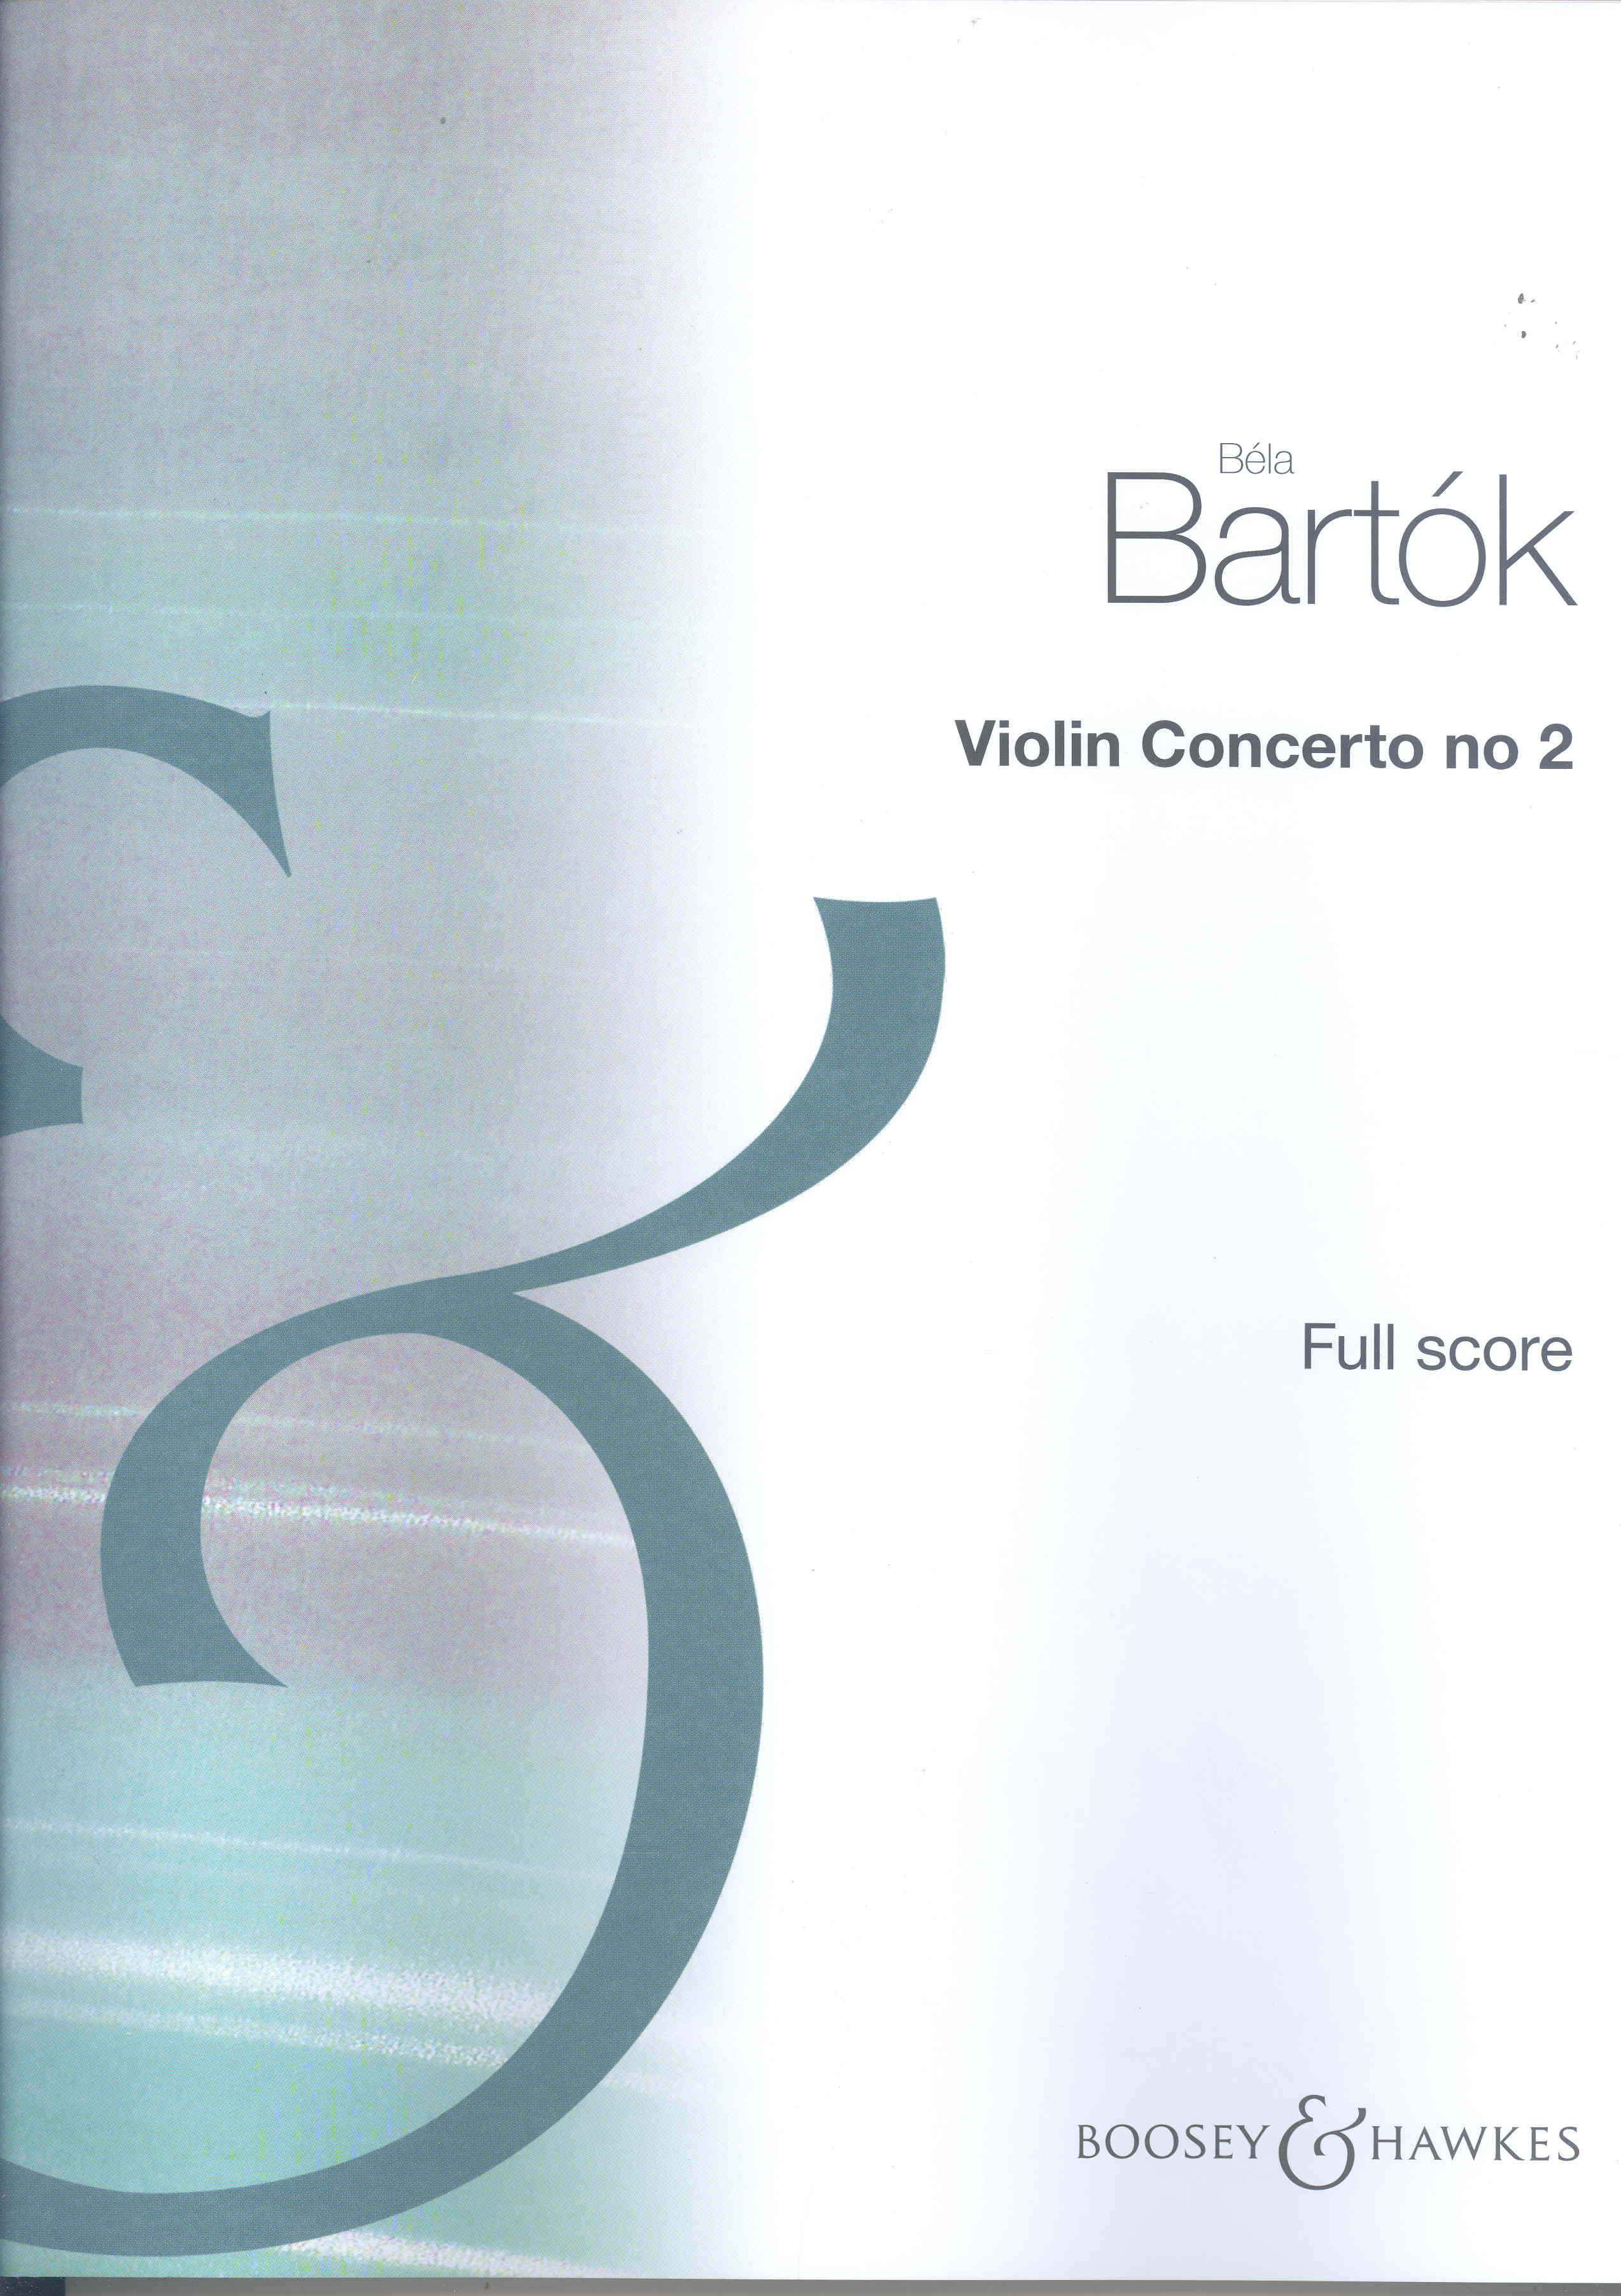 Bartok Violin Concerto No 2 Full Score Sheet Music Songbook